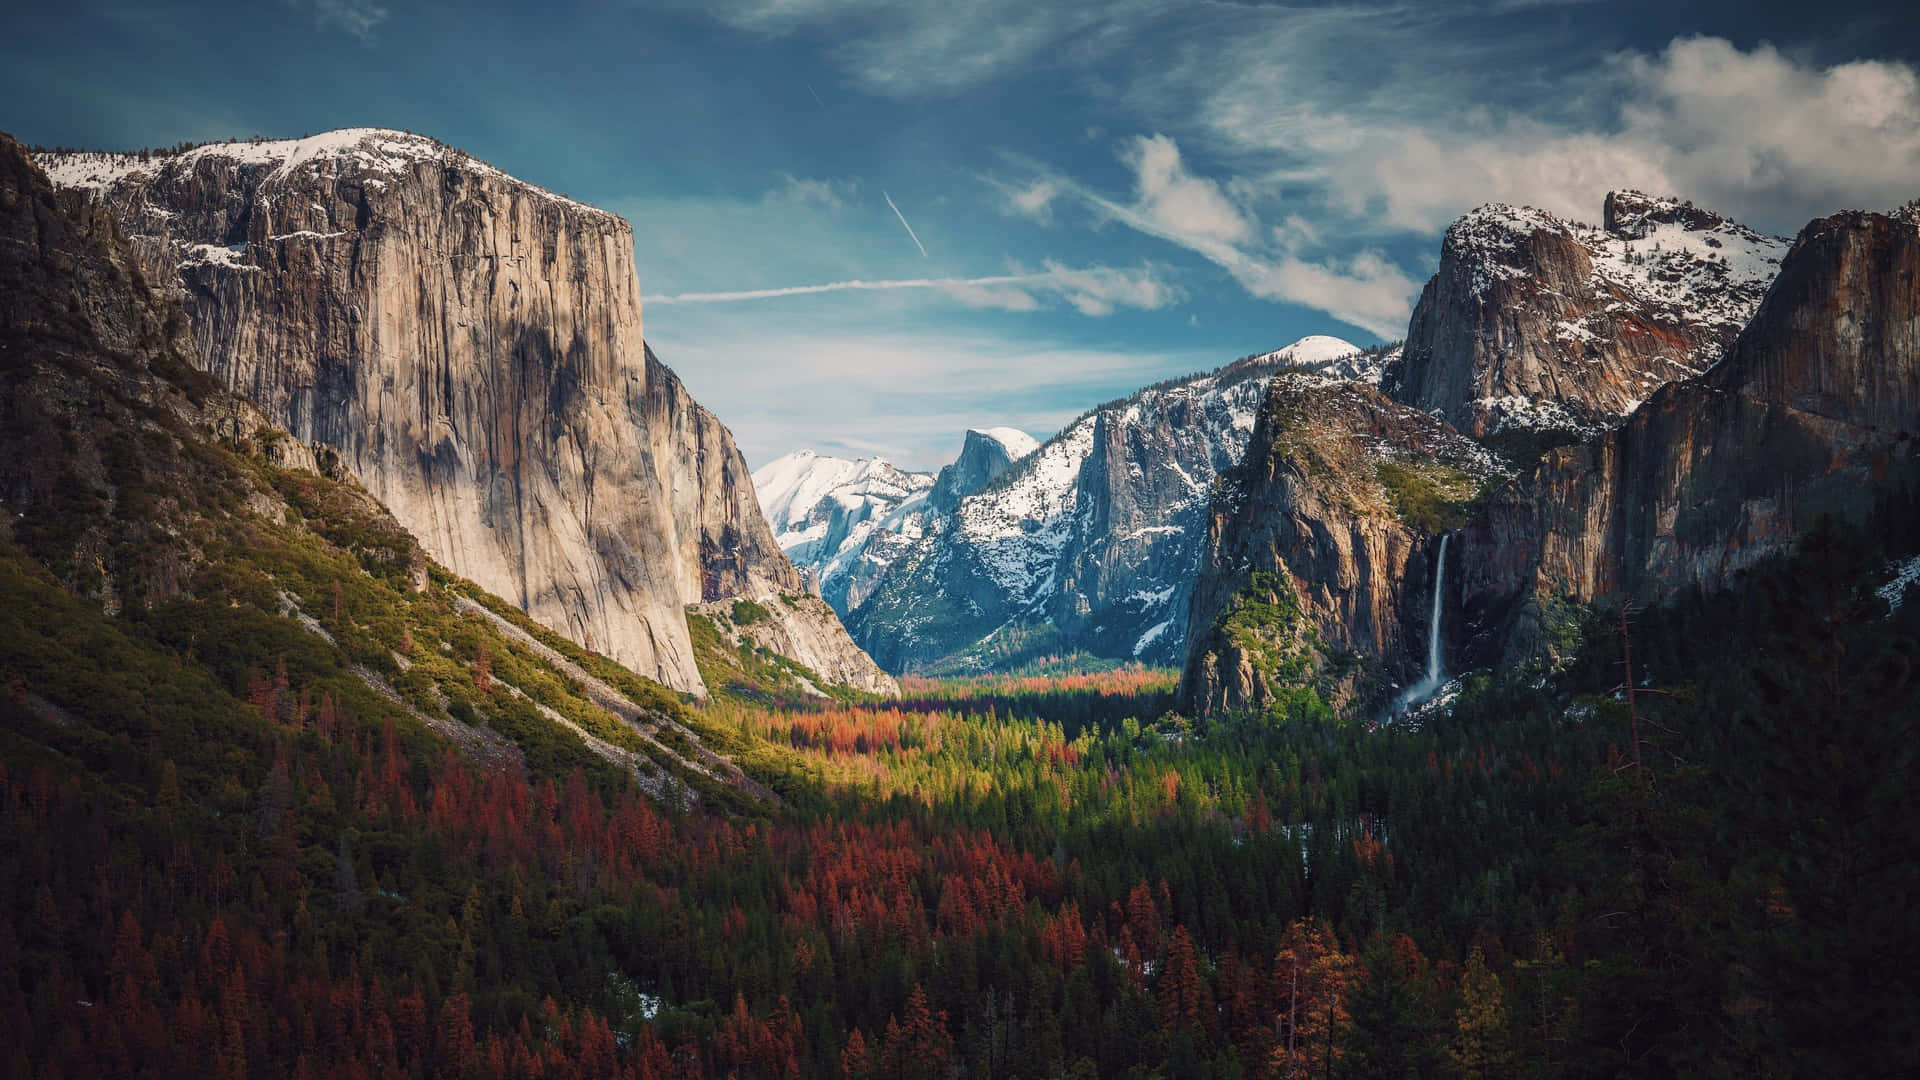 "El Capitan, the Iconic Rock Face of Yosemite National Park" Wallpaper